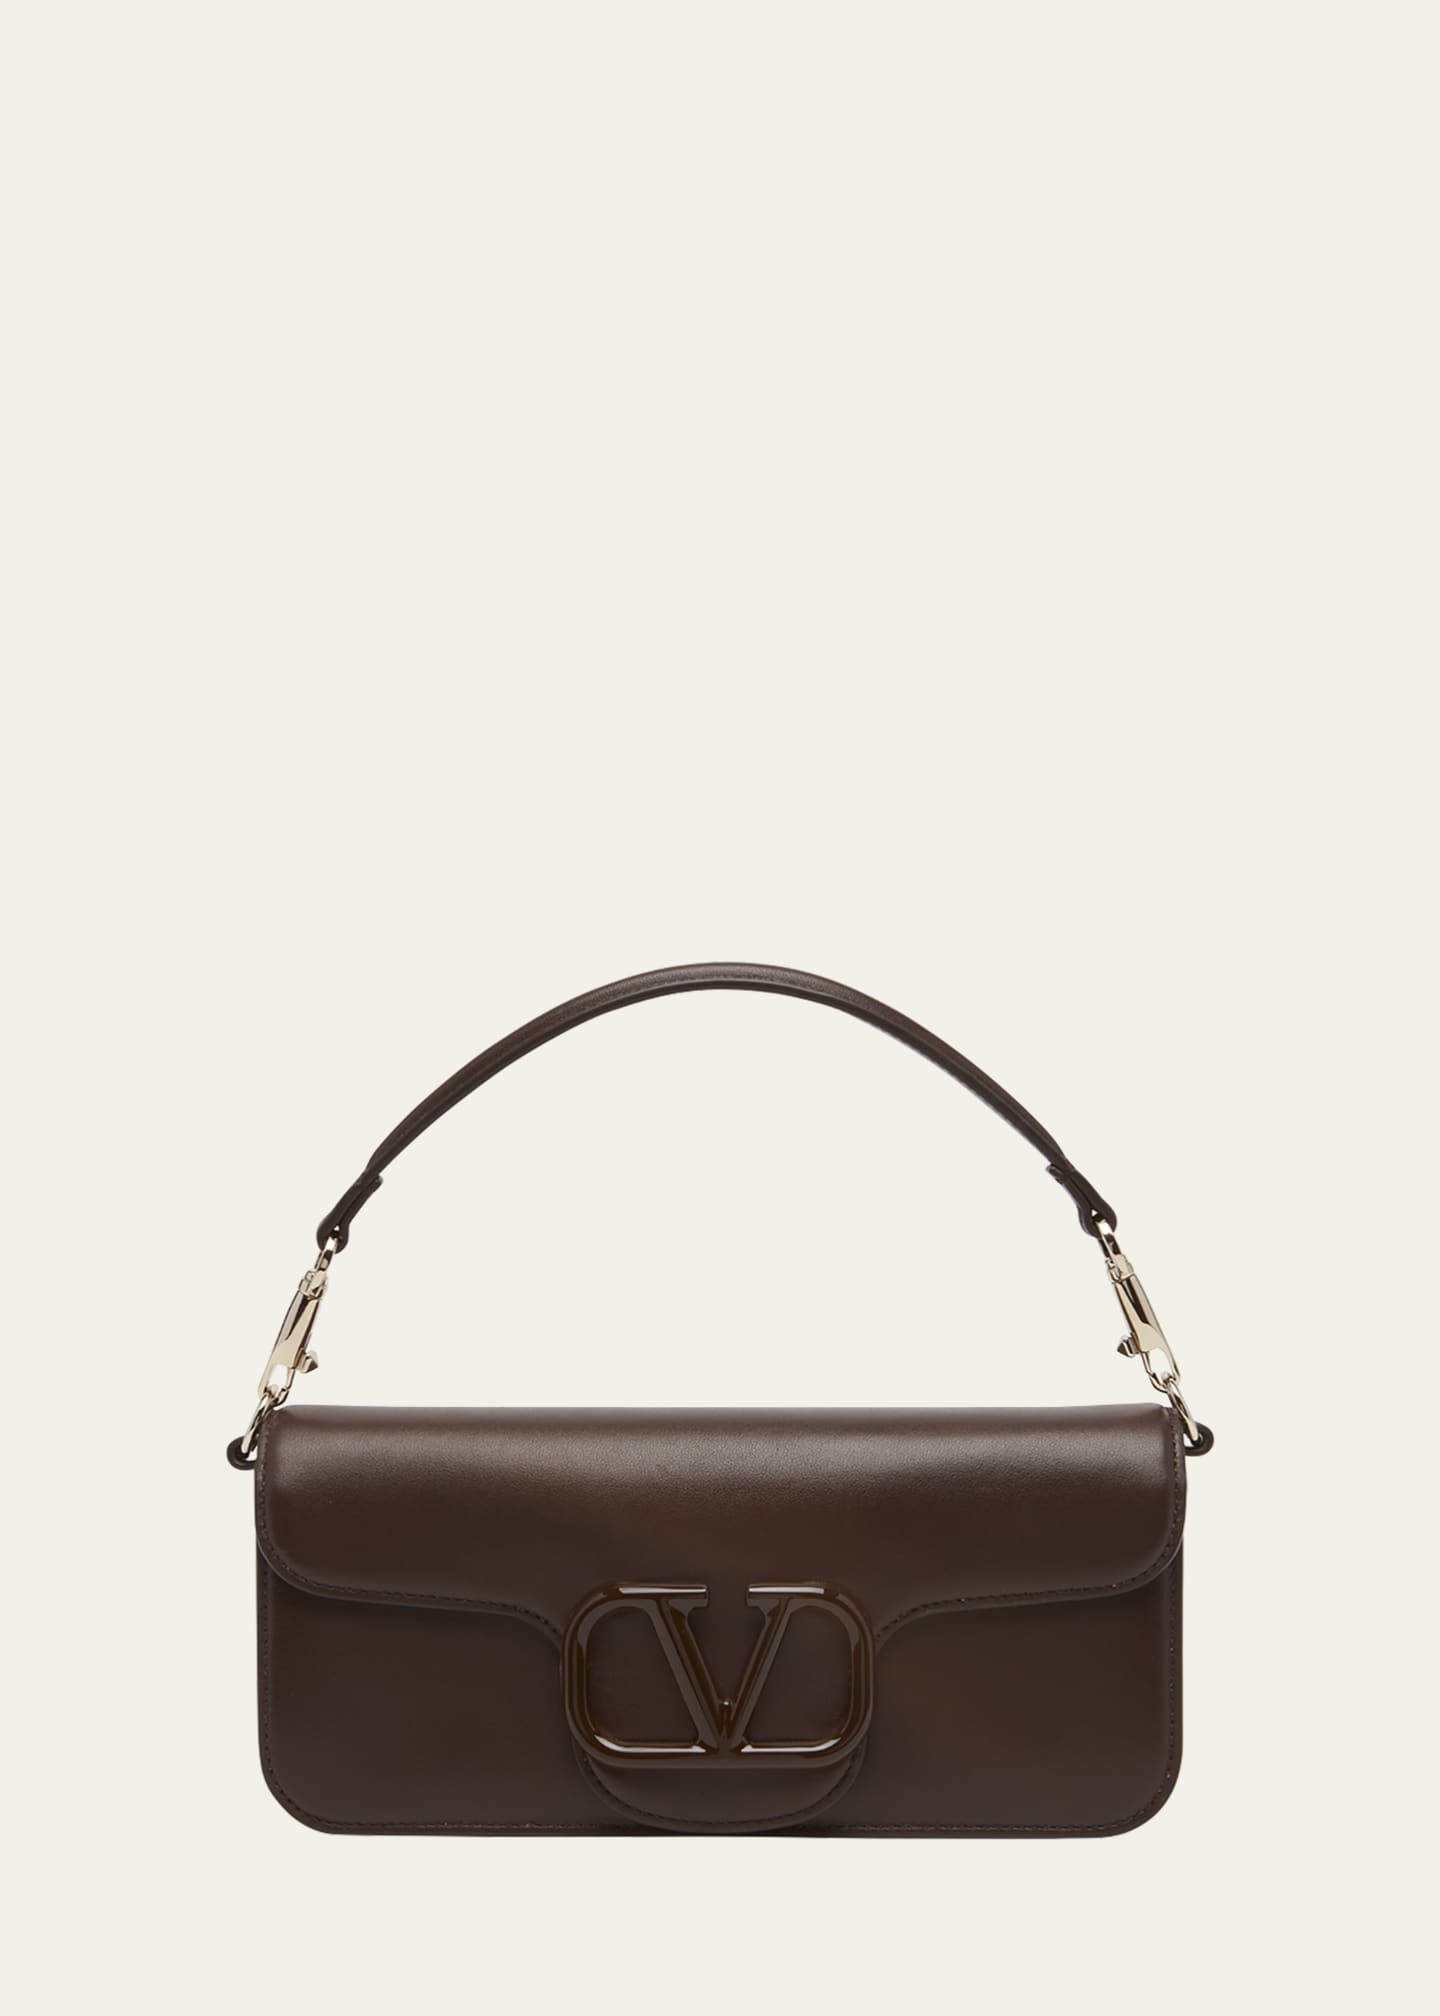 VLogo leather clutch bag